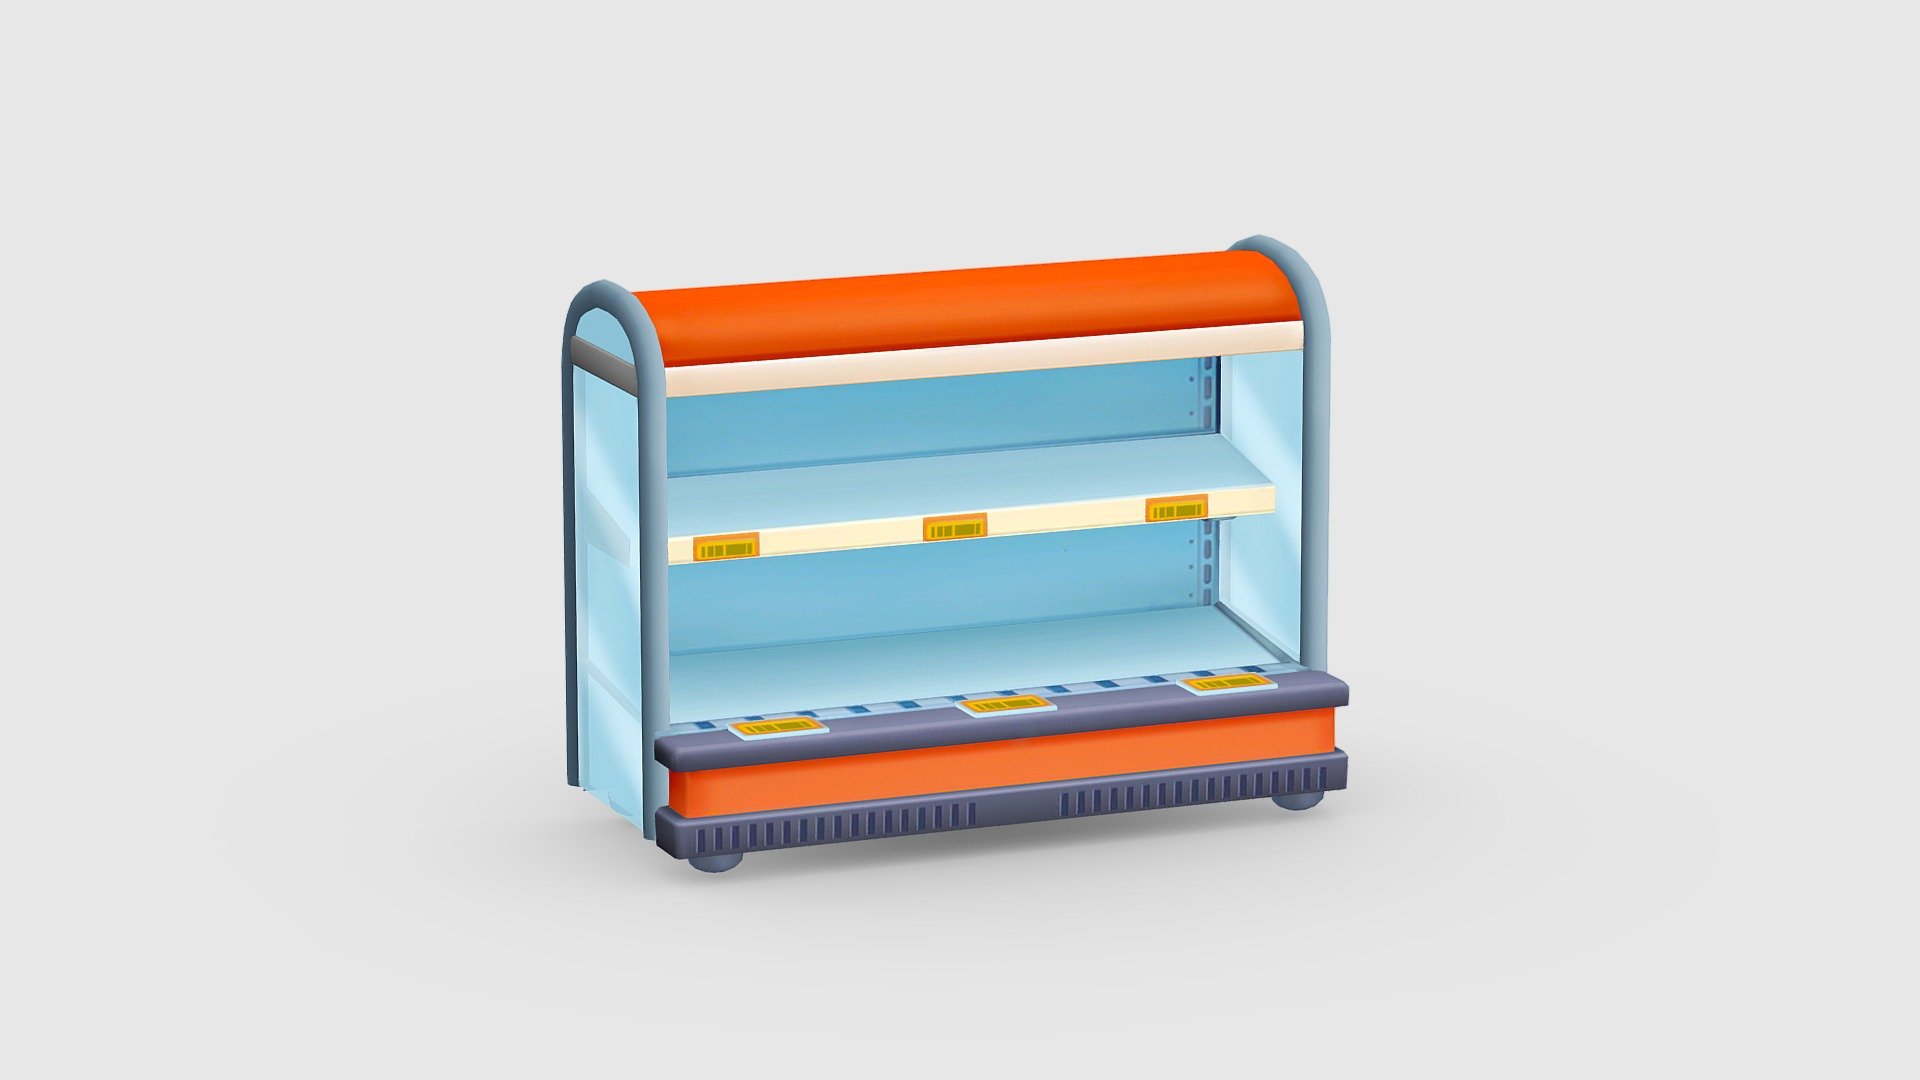 Cartoon freezer - keep in cold storage Low-poly 3D model - Cartoon freezer - keep in cold storage - 3D model by ler_cartoon (@lerrrrr) 3d model